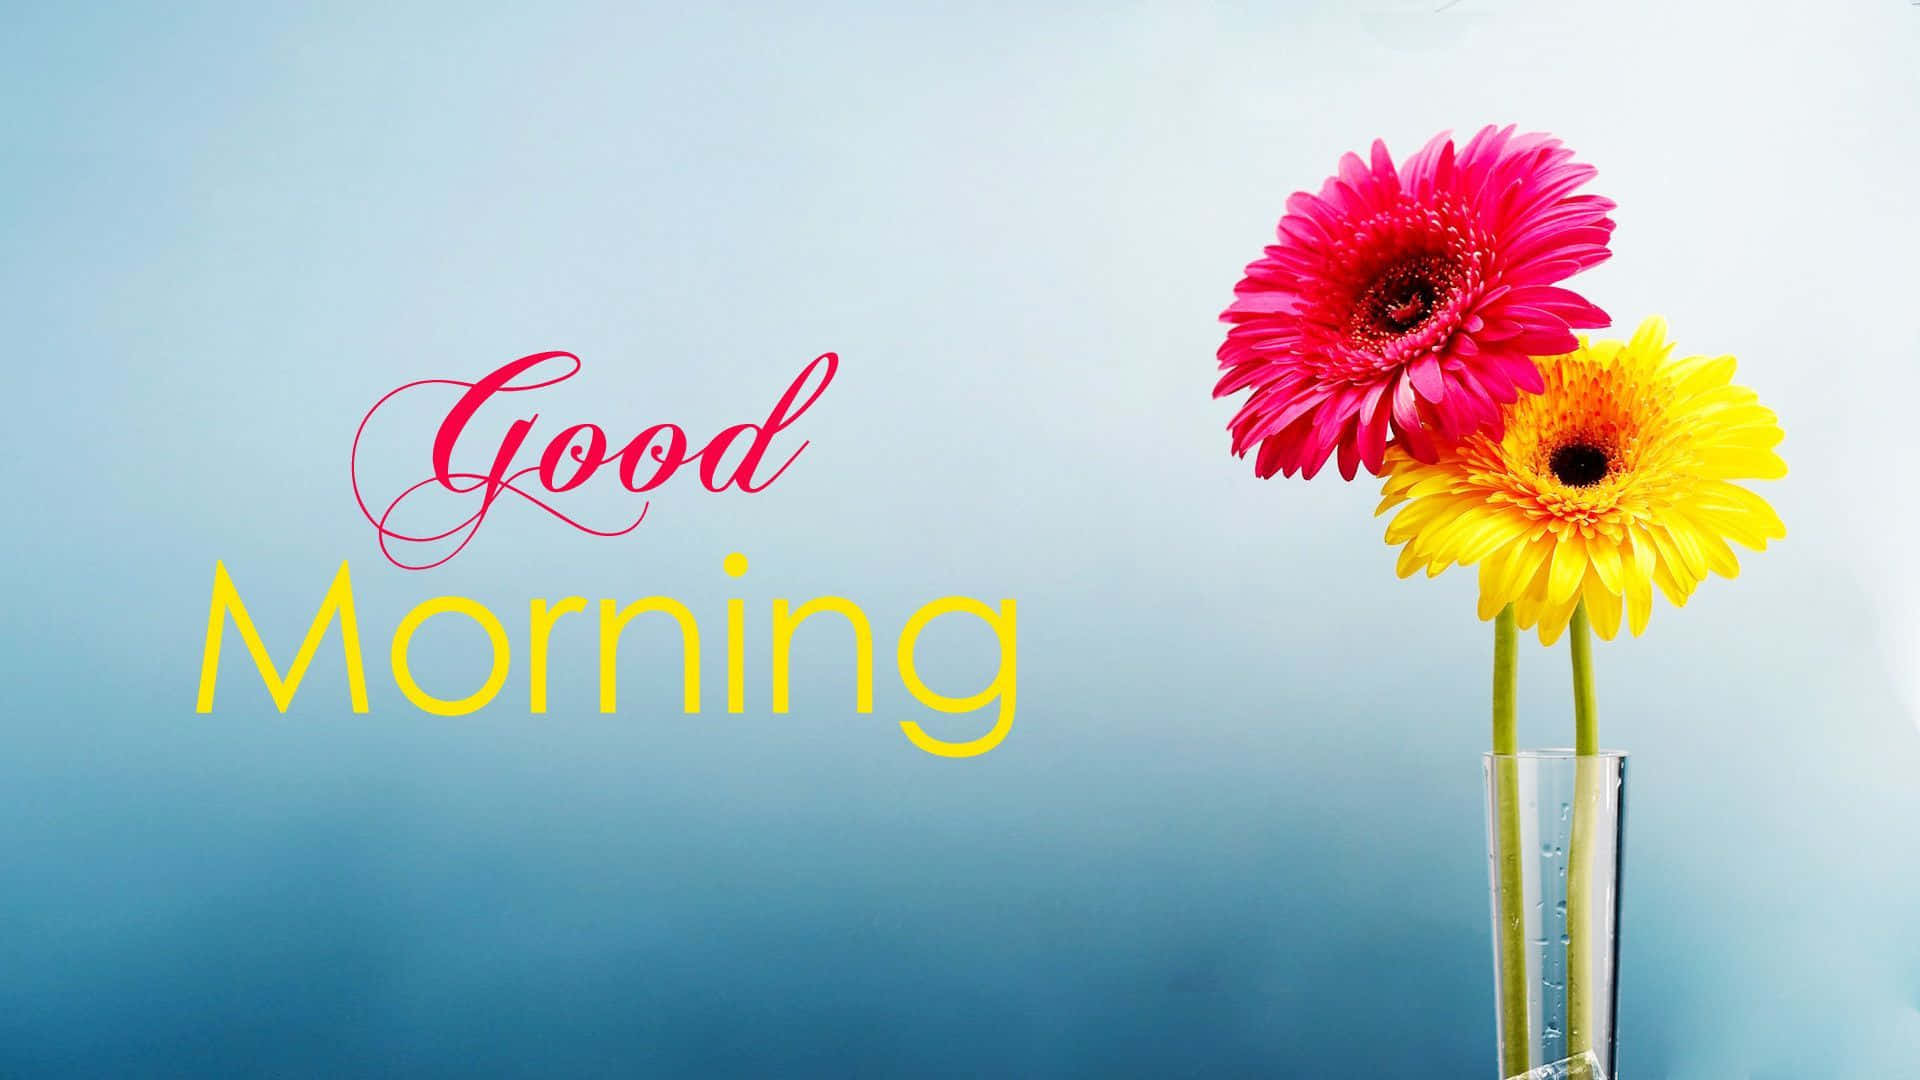 Good morning class. Good morning картинки. Good morning цветы. Good morning картинки красивые. Best Wishes фон.